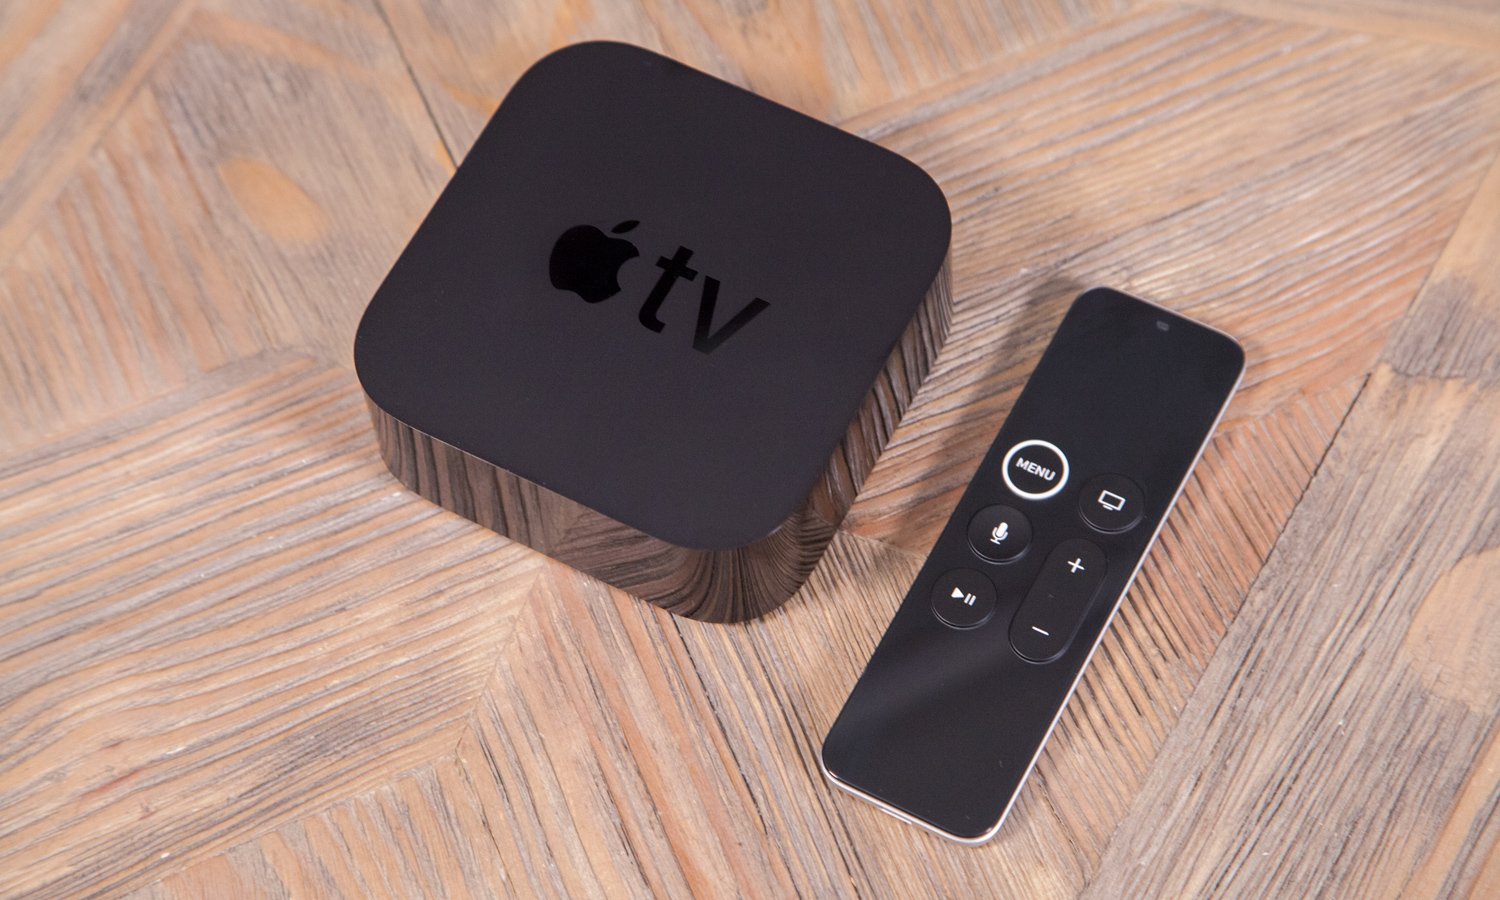 Melhor Miracast: Apple TV